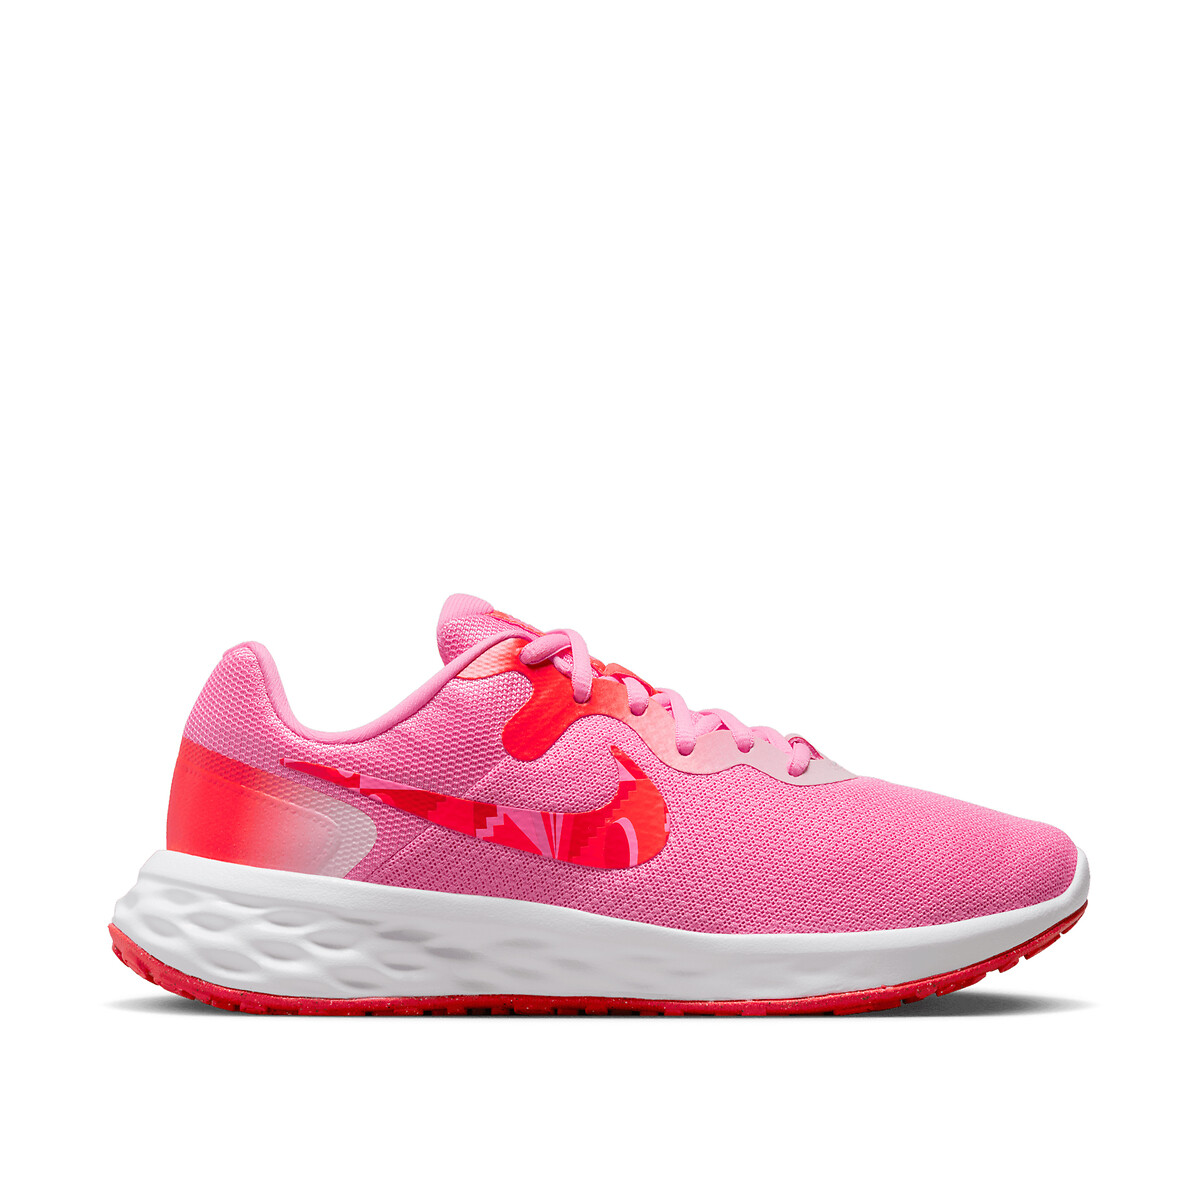 vertrouwen Brandweerman Nationale volkstelling Sneakers revolution roze Nike | La Redoute